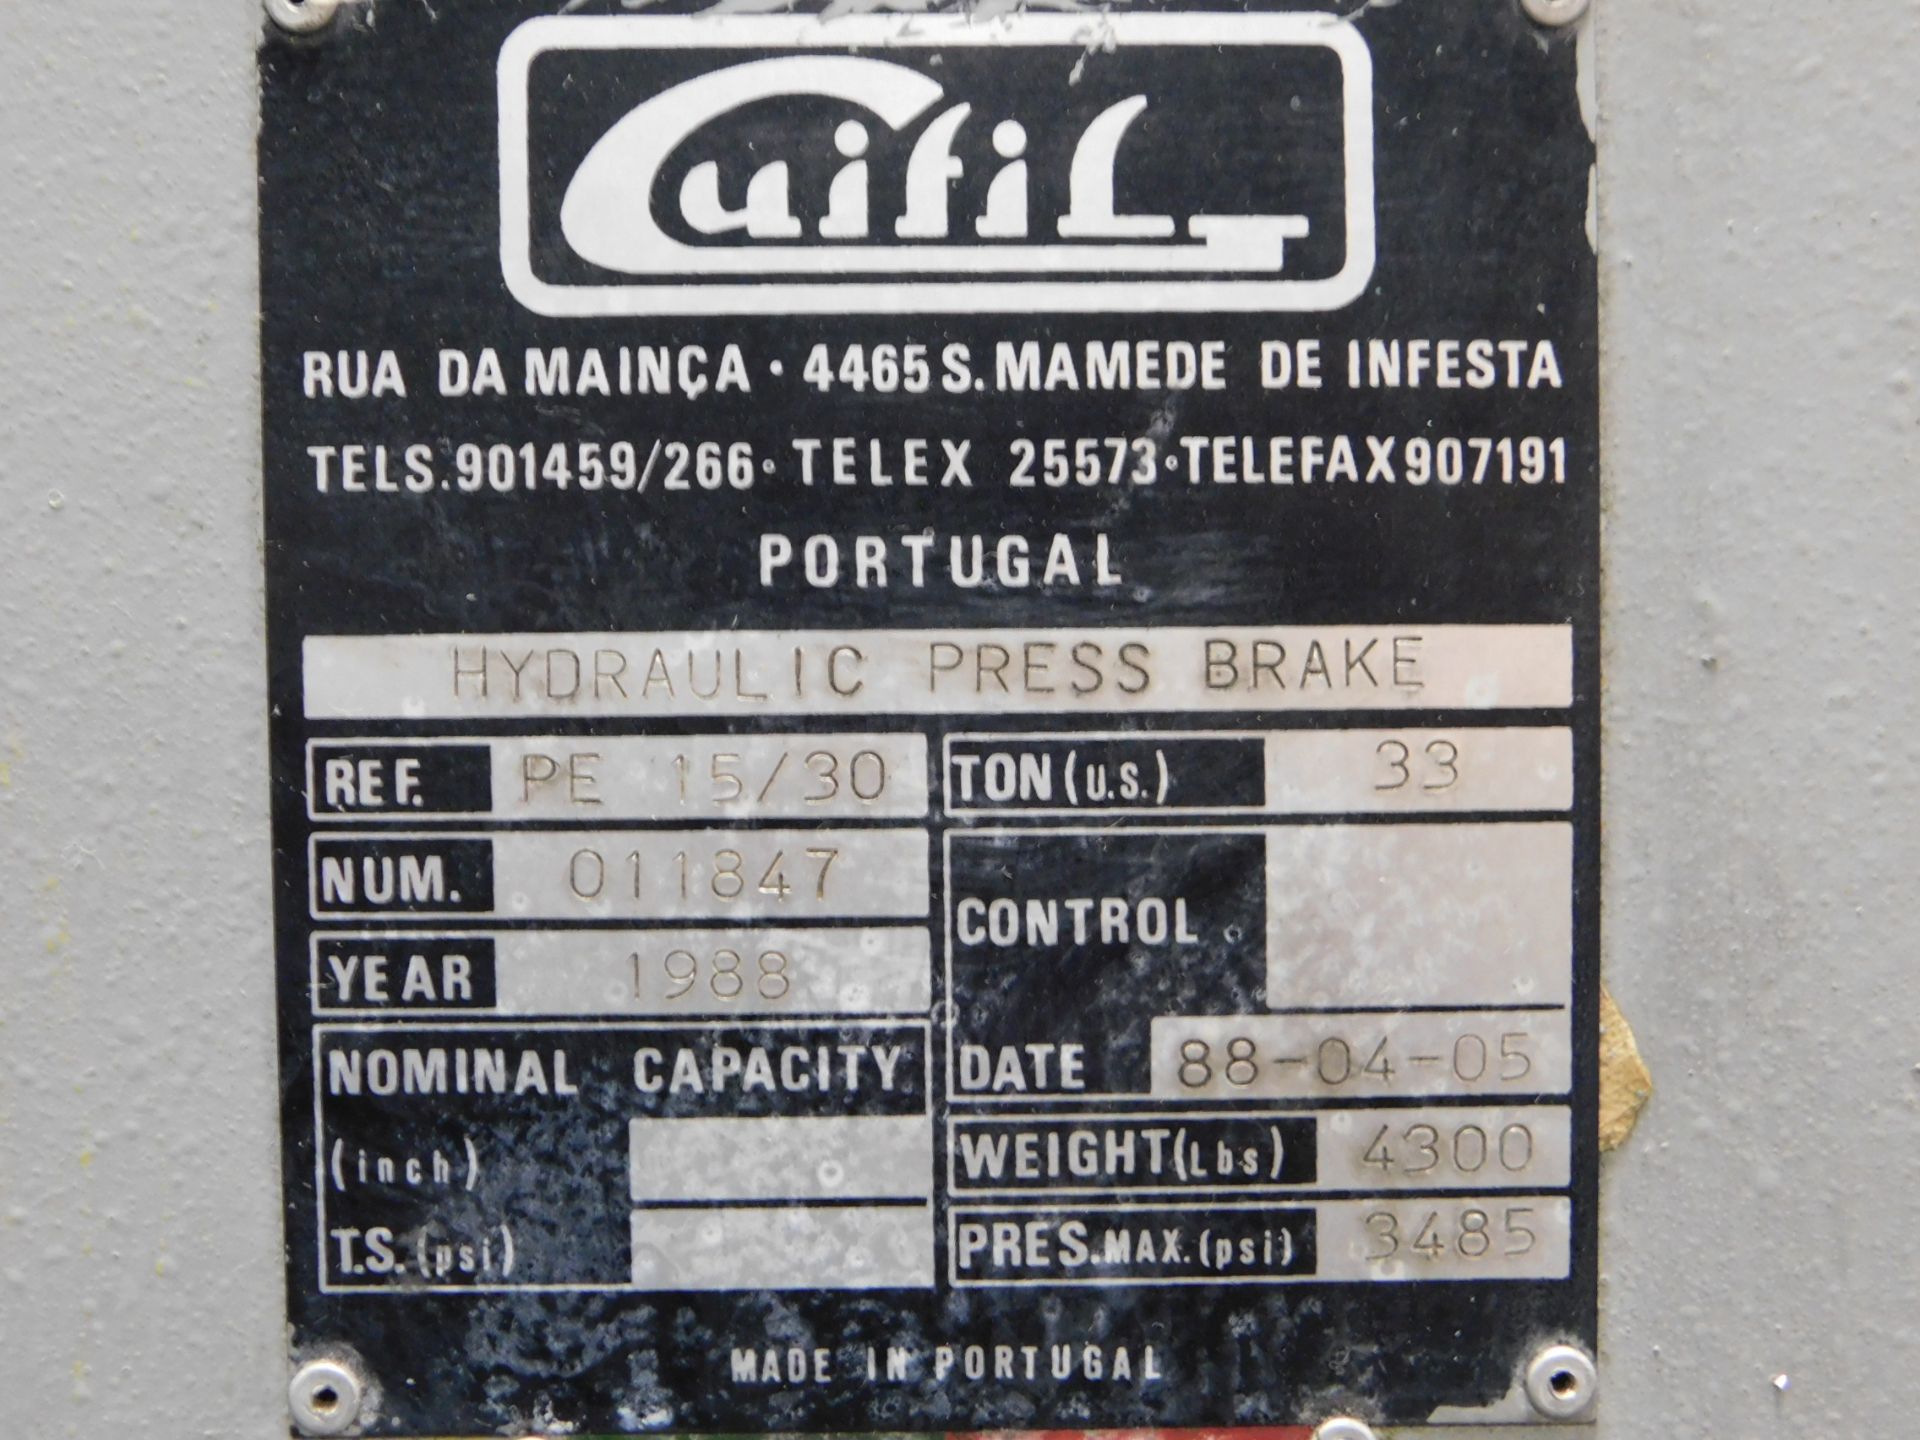 Guilfil Model PE-30 Upacting Hydraulic Press Brake, 5 Ft X 33 Ton Capacity, s/n 011847, New 1988, 62 - Image 14 of 19